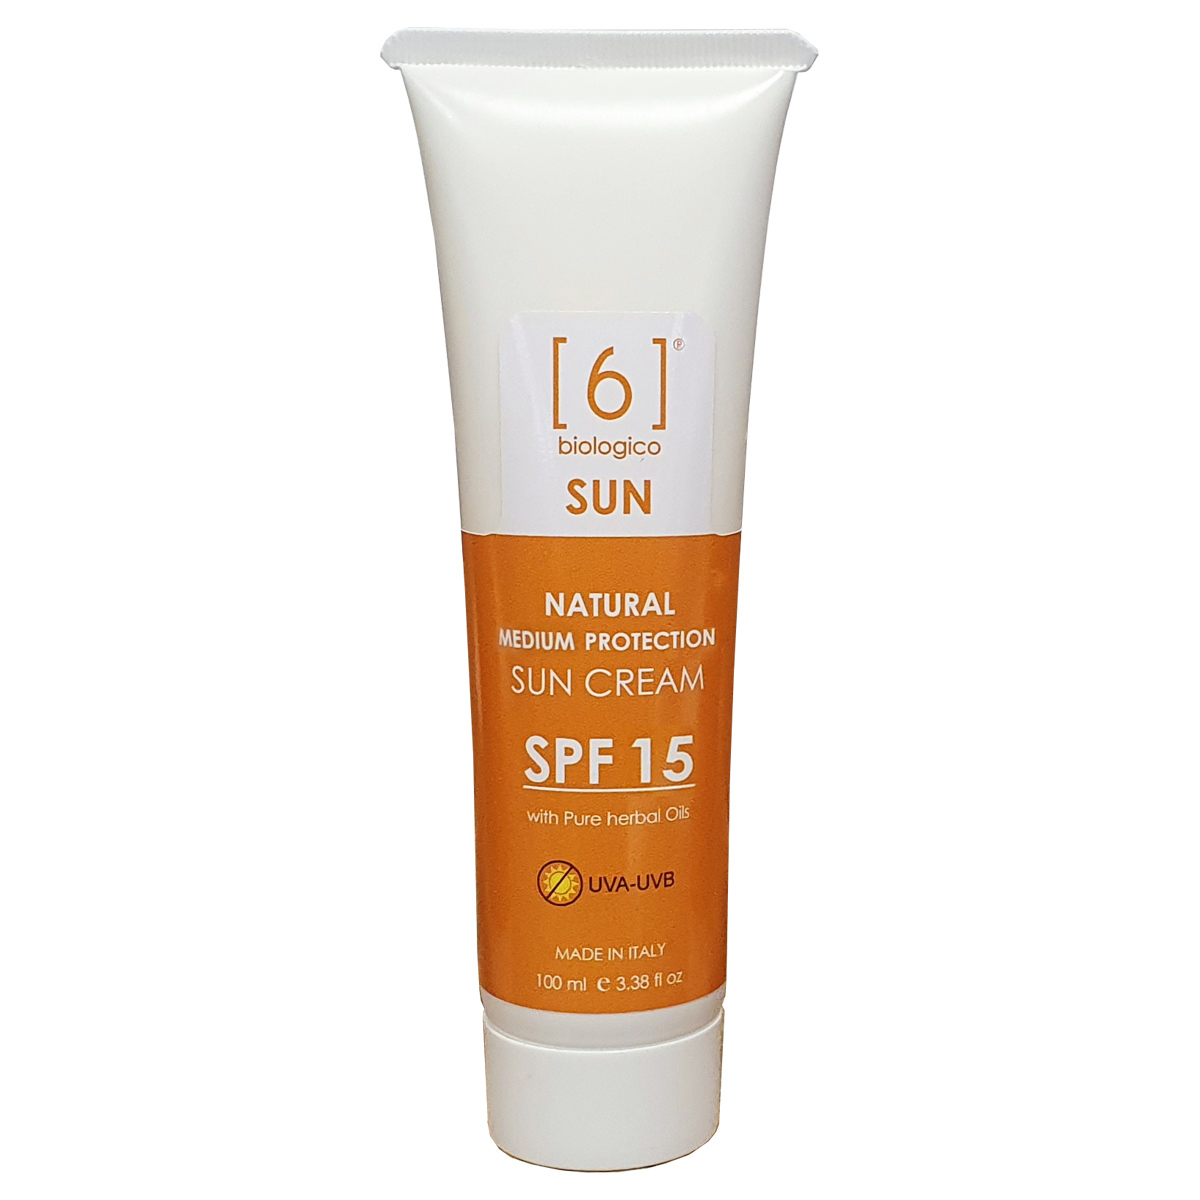 Natural Medium Protection Sun Cream SPF15